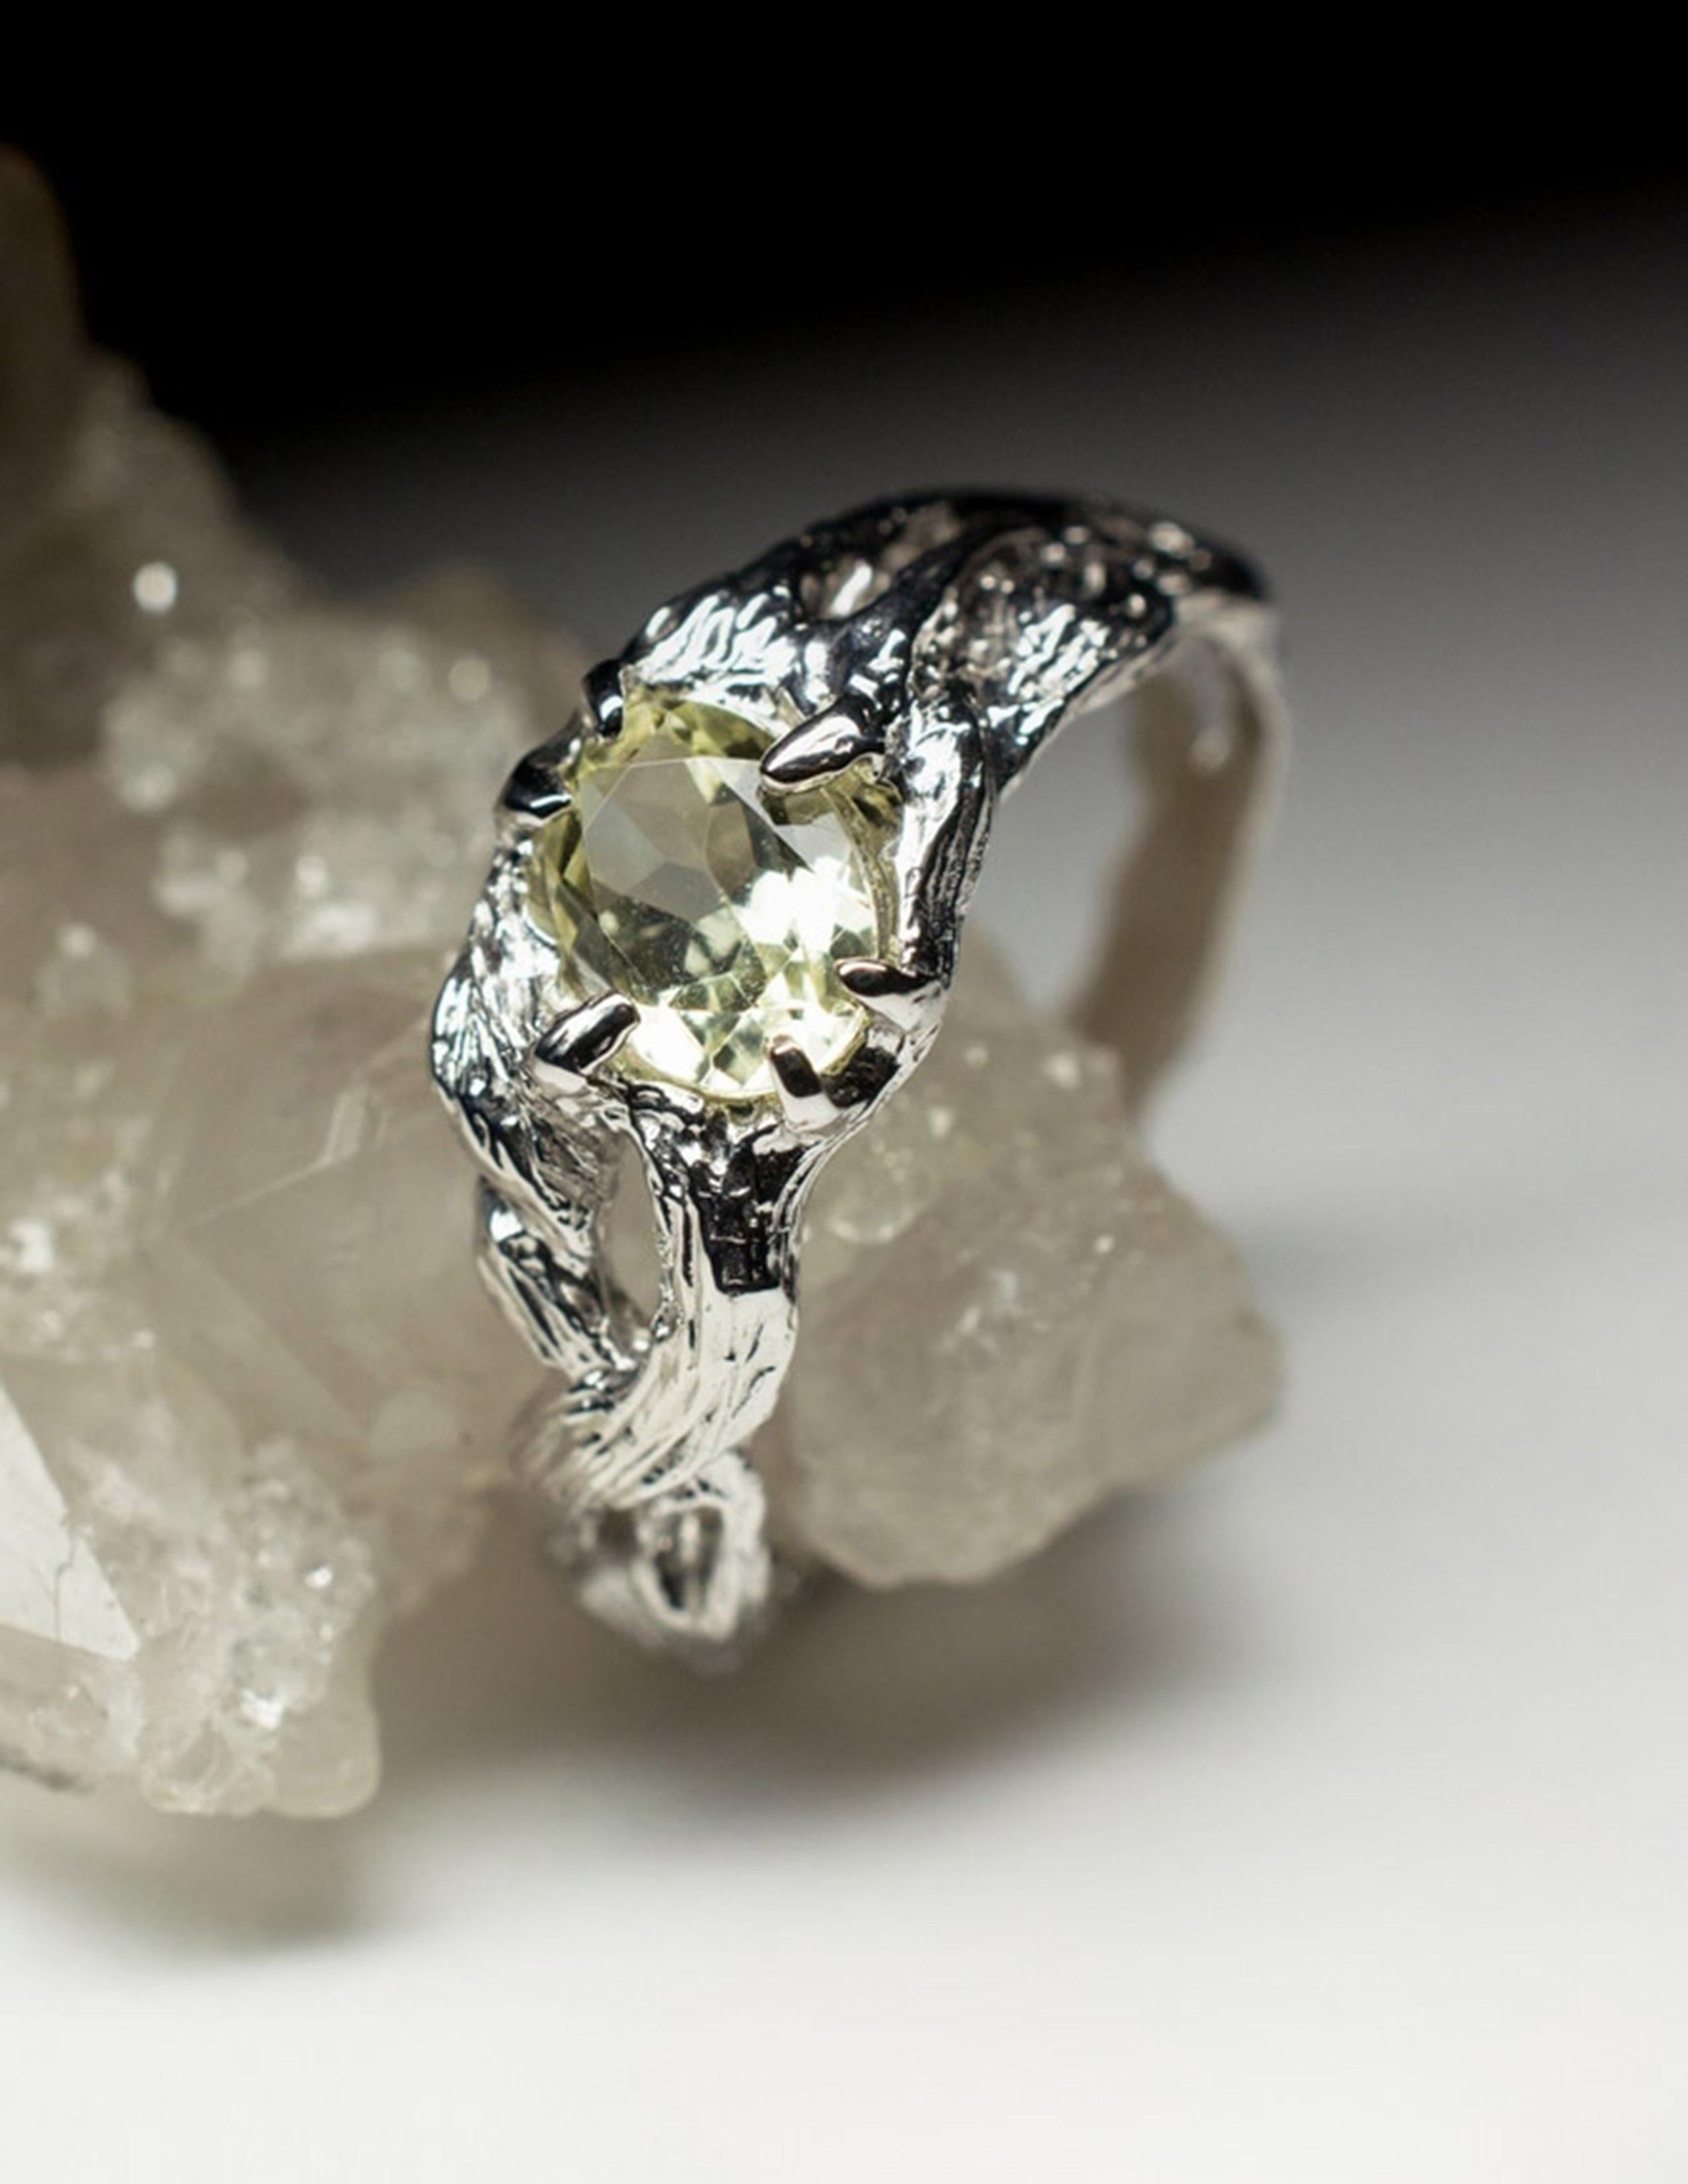 Silver ring with natural Citrine fantasy oval cut
citrine origin - Bolivia
stone measurements - 0.12 х 0.2 х 0.28 in / 3 х 5 х 7 mm
ring weight  - 3.05 gram
ring size - 6.5 US 